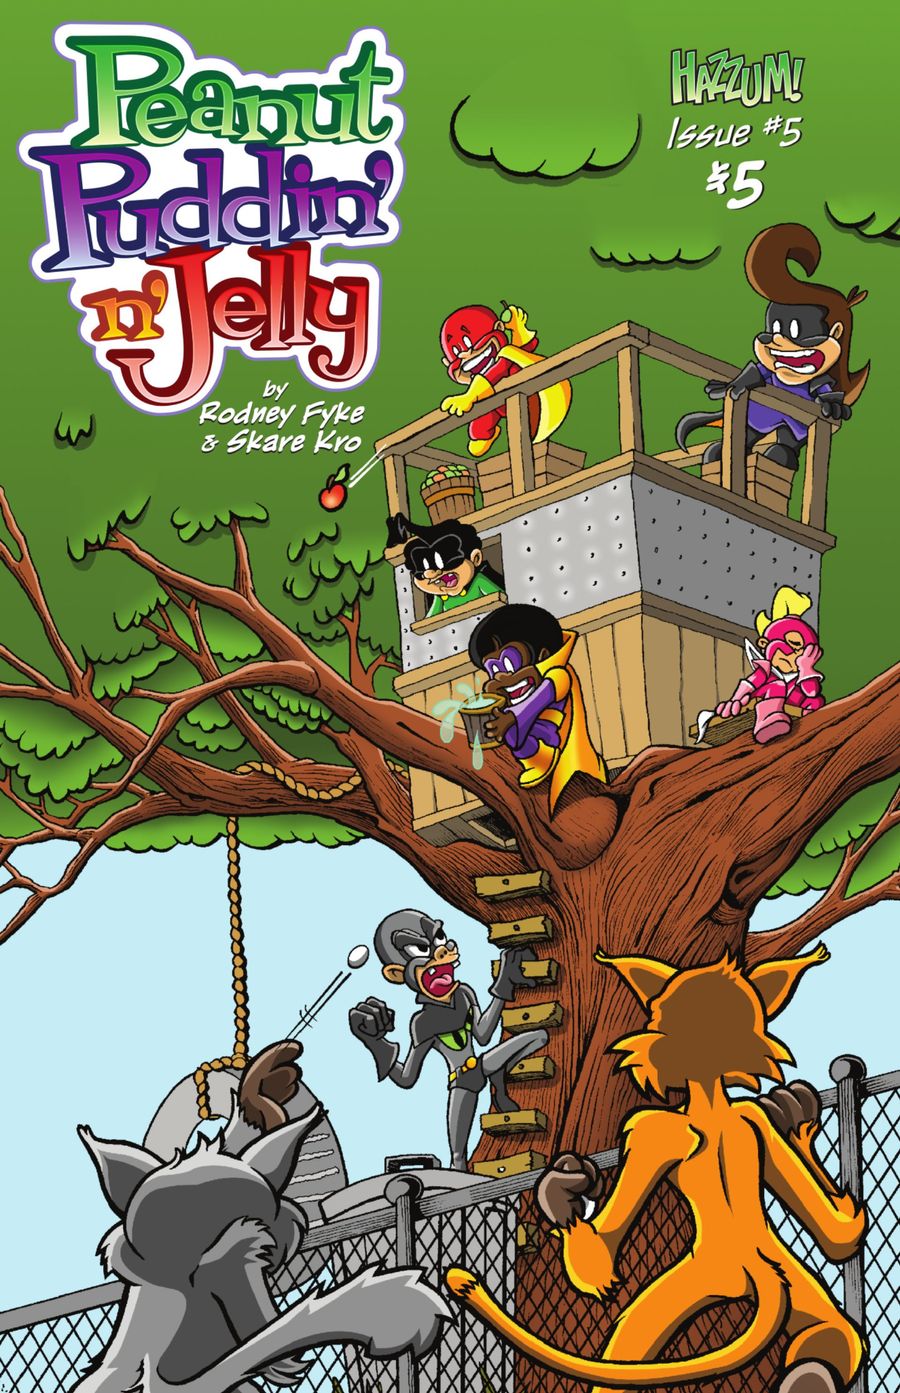 Hazzum | Peanut, Puddin' n' Jelly #5 page 1 | Spinwhiz Comics